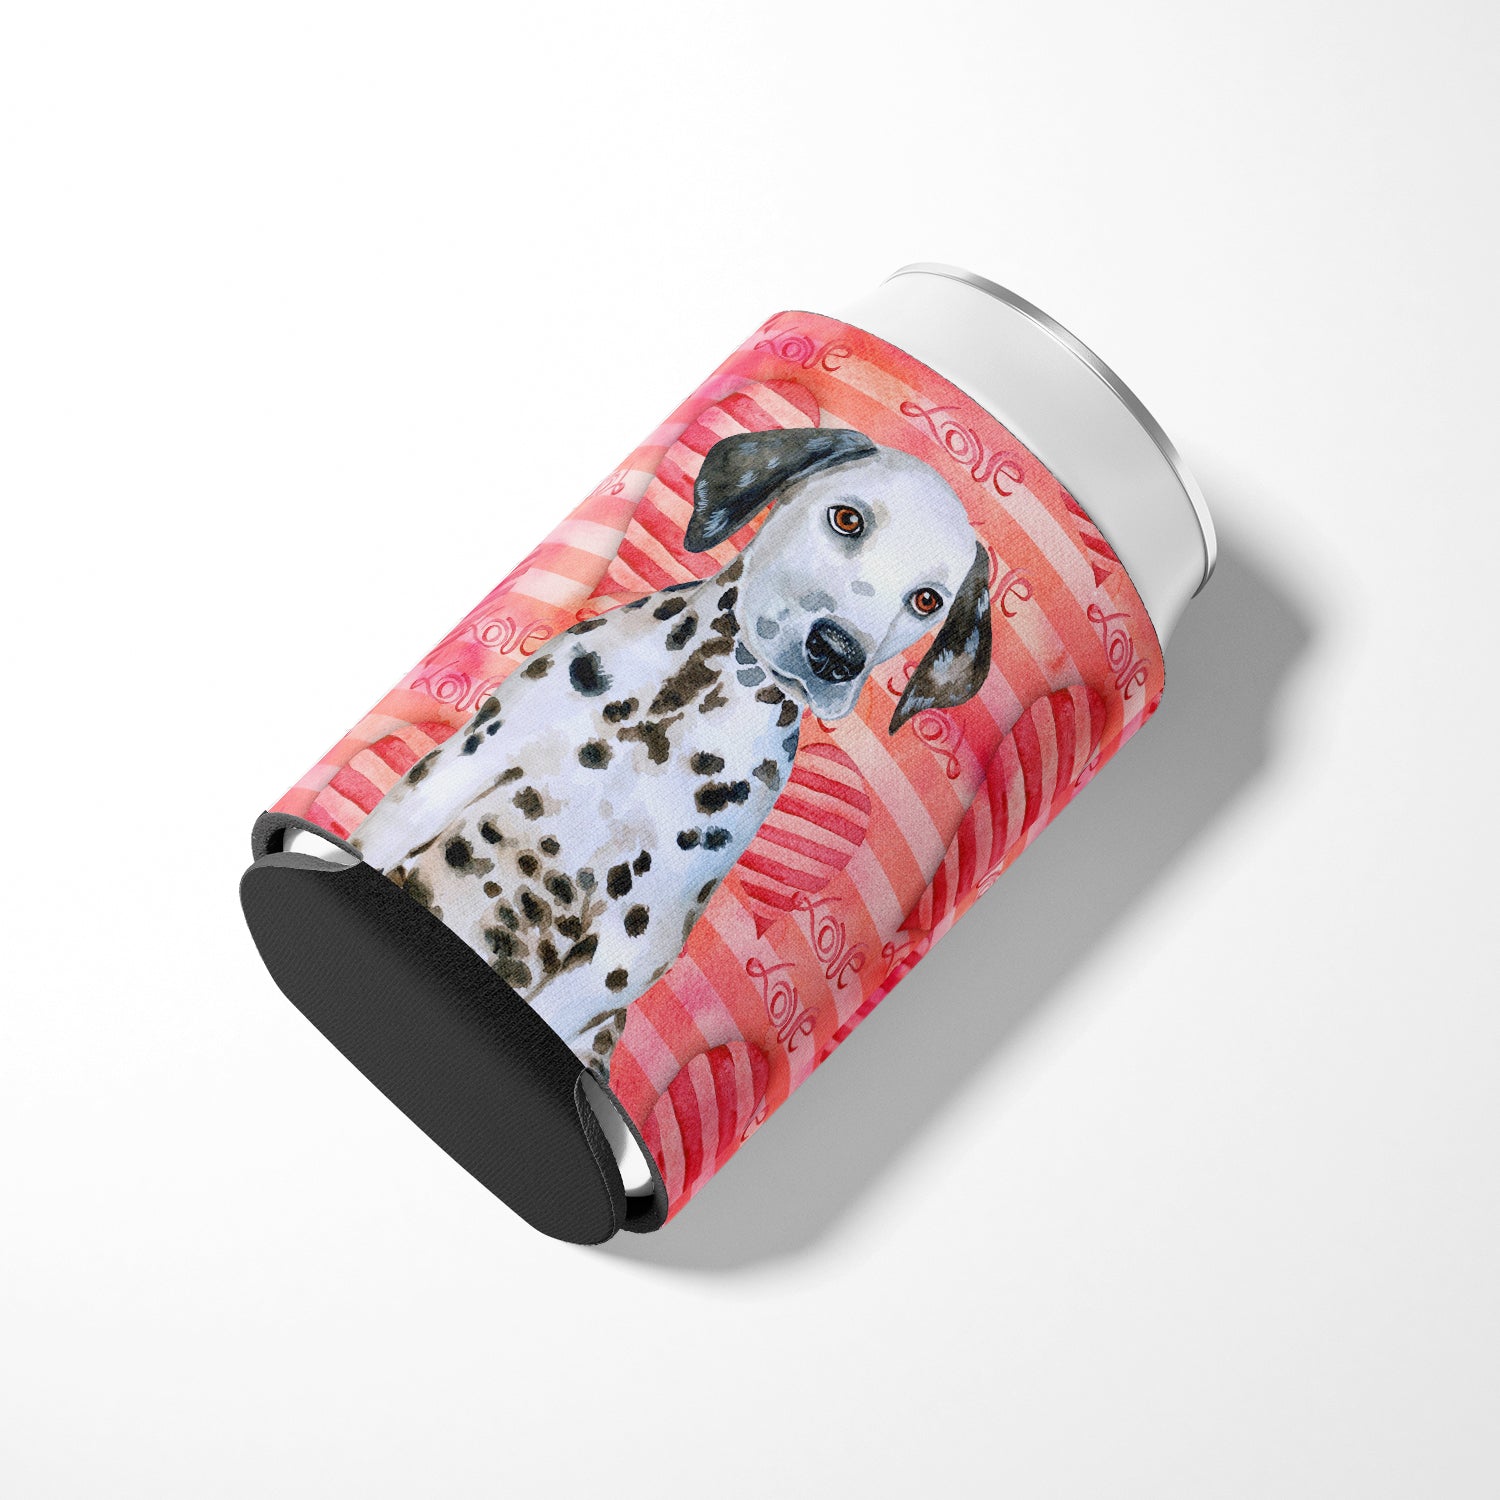 Dalmatian Puppy Love Can or Bottle Hugger BB9795CC